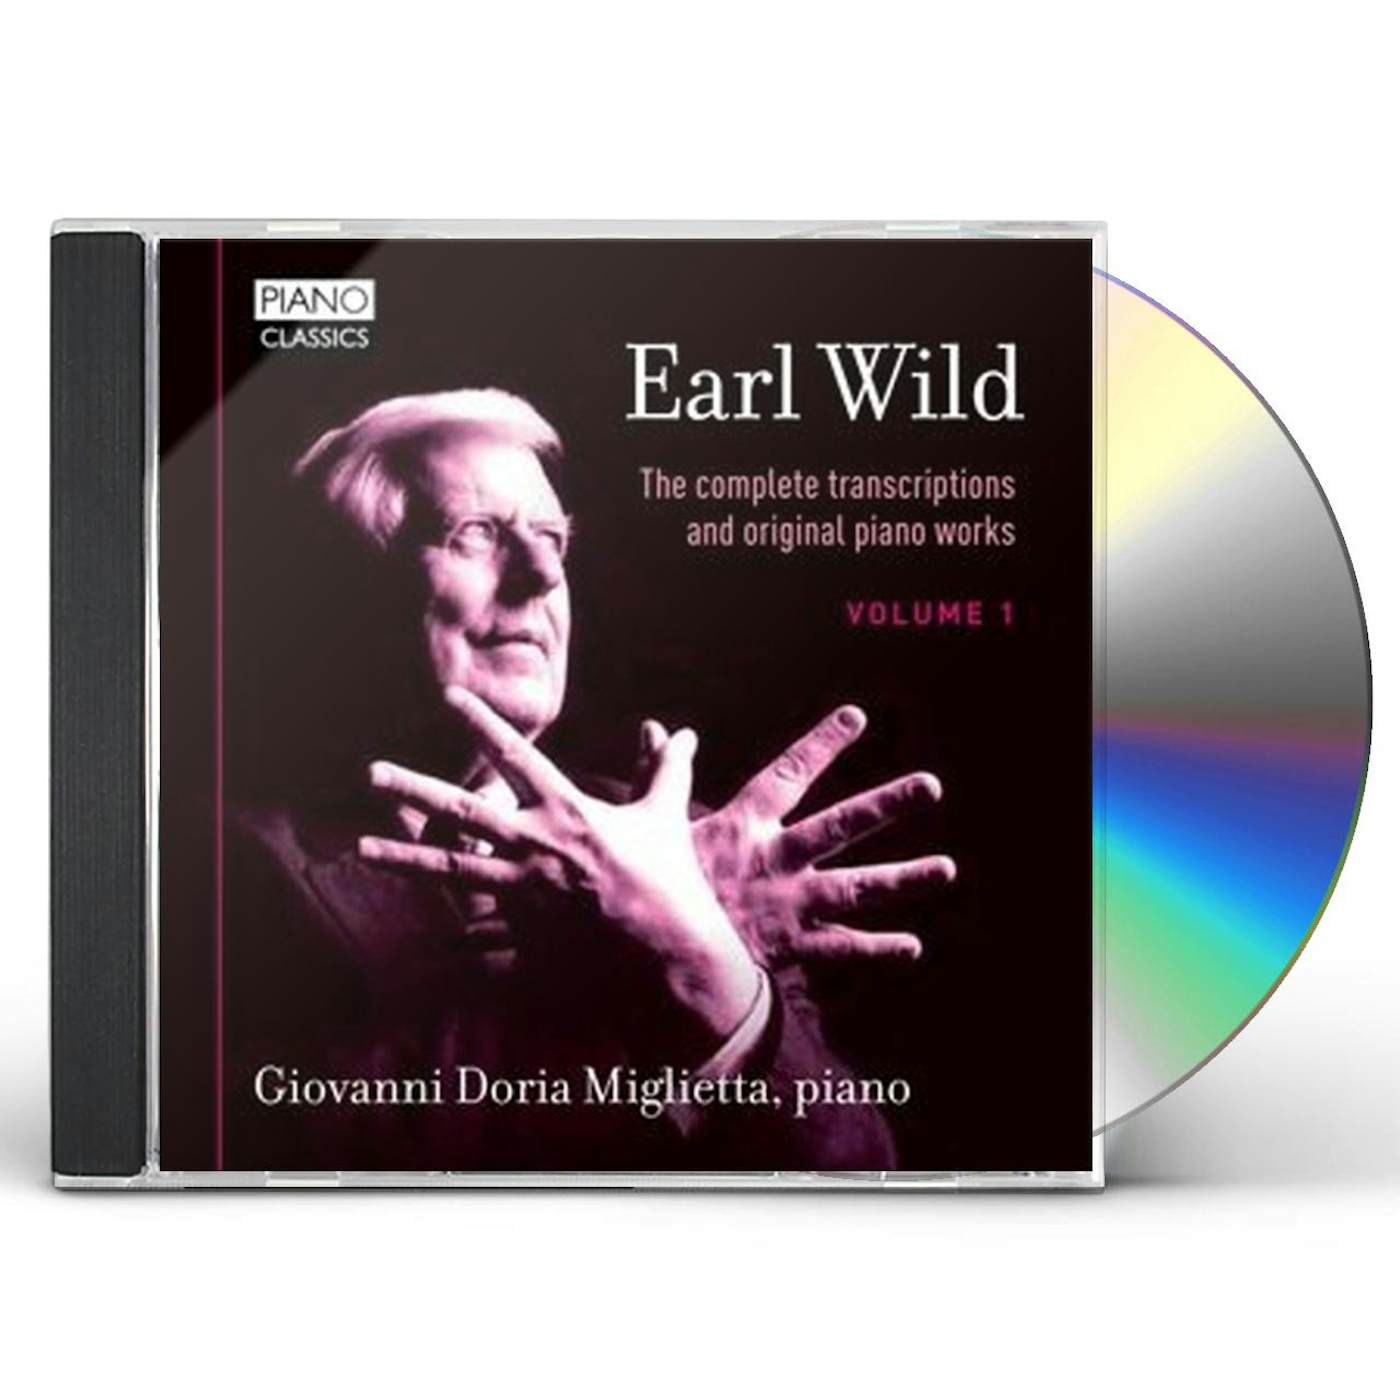 The Wild COMP TRANSCRIPTIONS & ORIGINAL PIANO WORKS VOL 1 CD